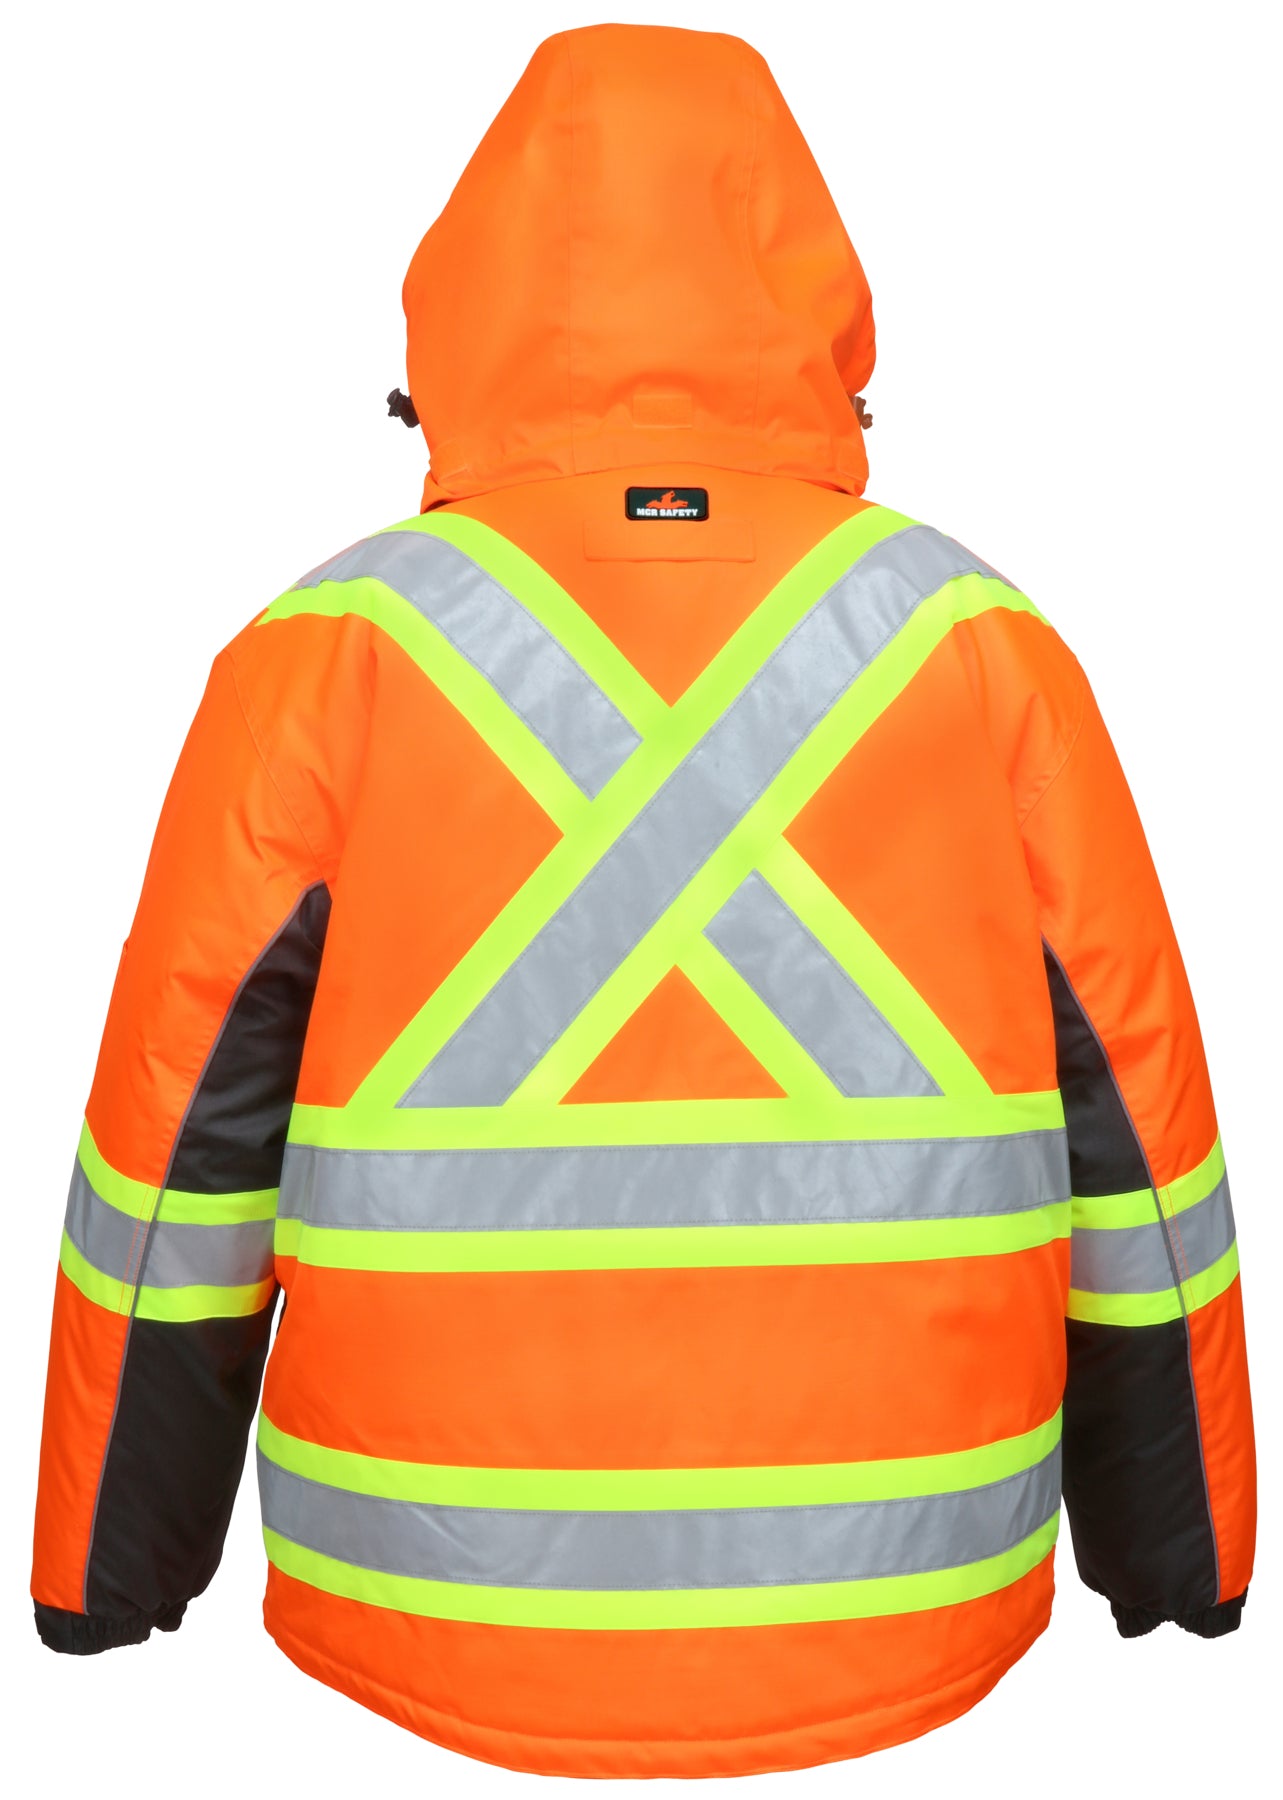 VT31JH - Vortex Hi Vis Rain Gear Double Insulated Fleece Jacket